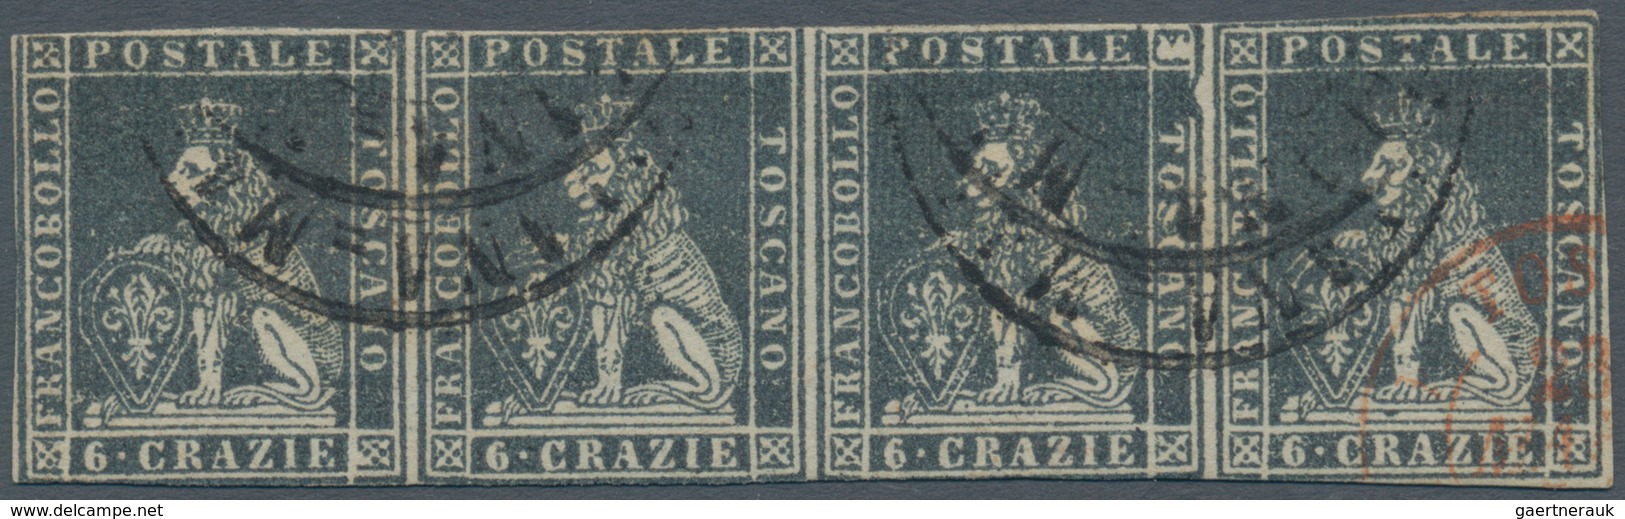 00893 Italien - Altitalienische Staaten: Toscana: 1851, 6 Crarie Dark Grey On Grey Paper, Horizontal Strip - Toscane